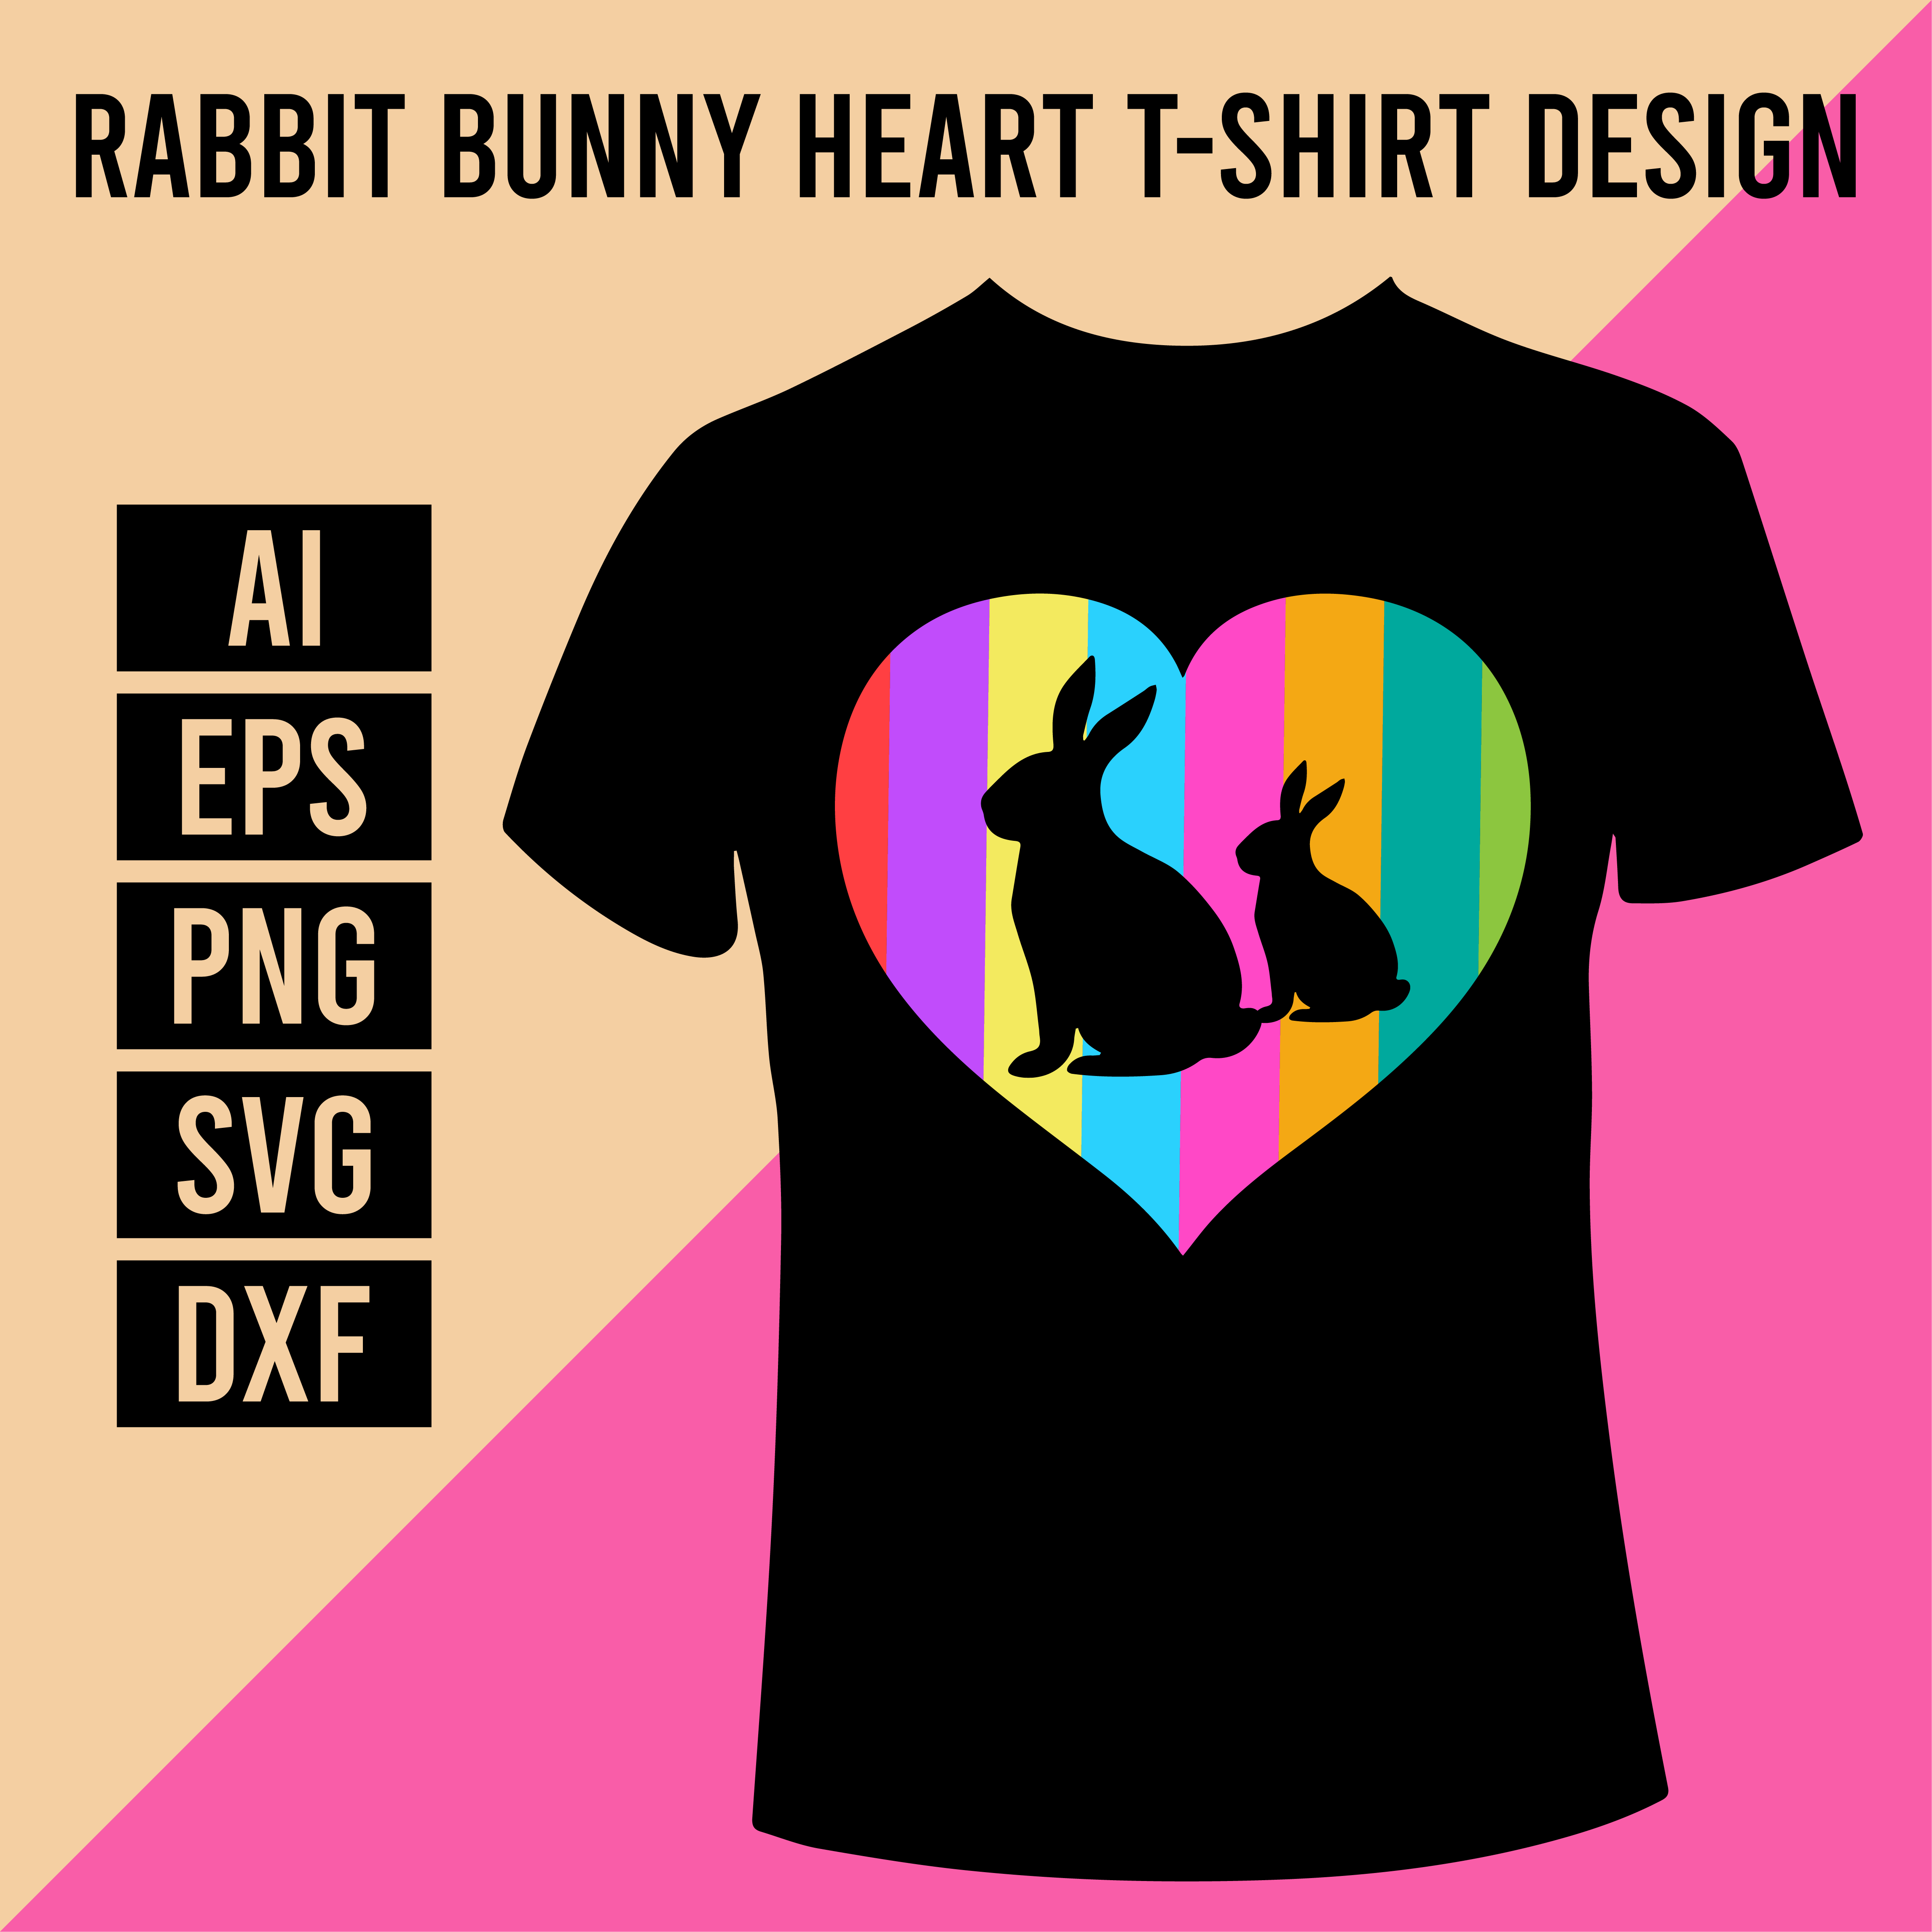 Rabbit Bunny Heart T-Shirt Design cover image.